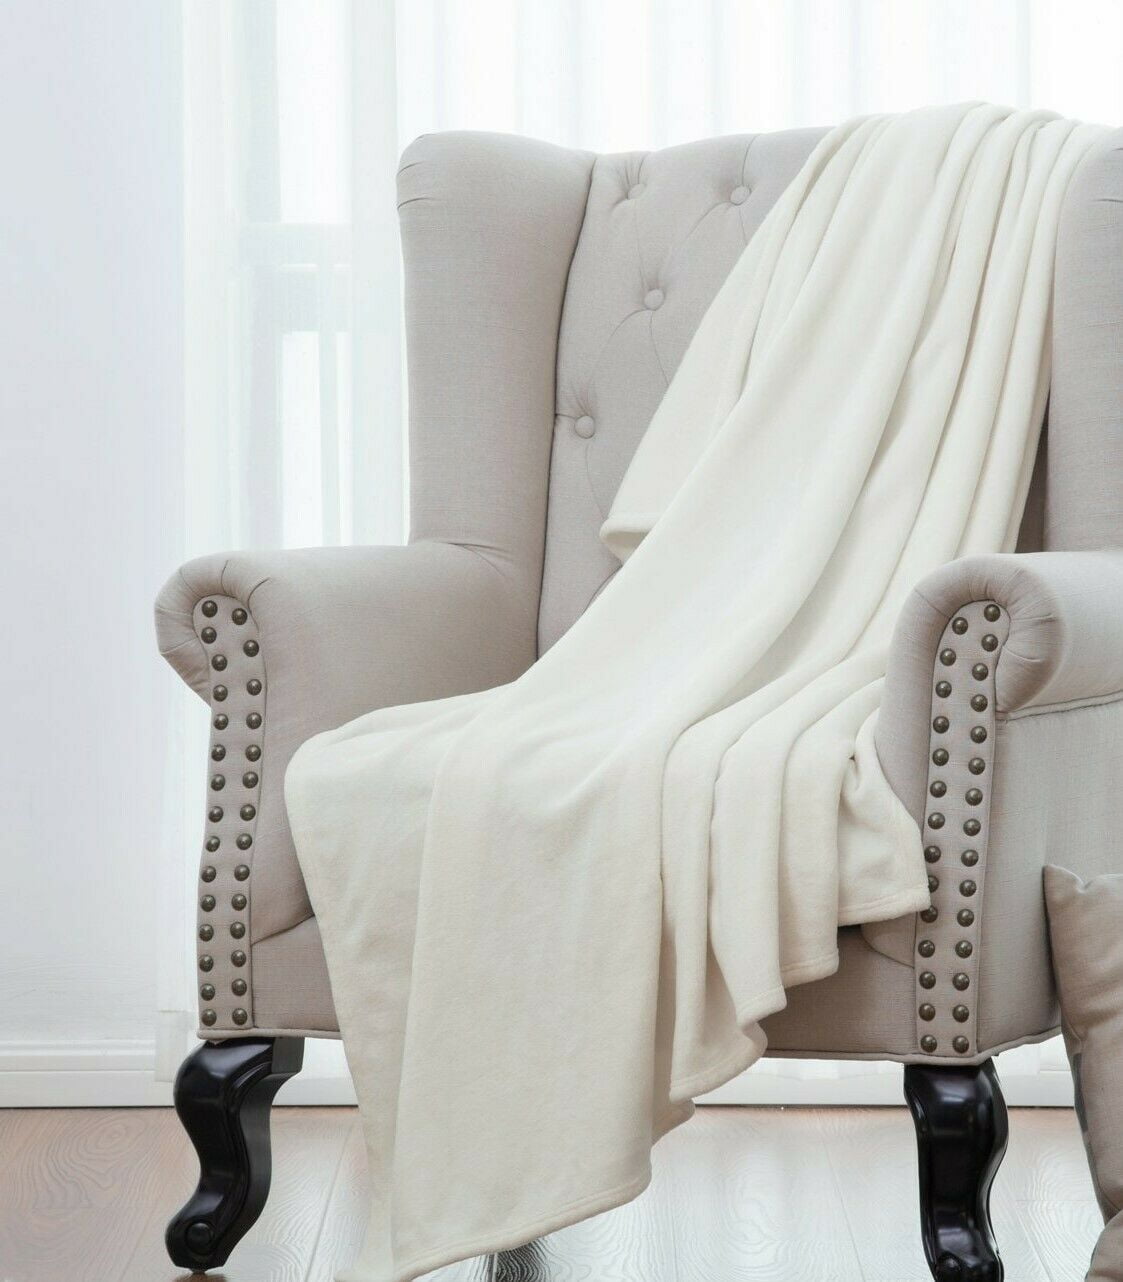 GorgeousHomeLinen 1 Orange Brick Small Throw Super Soft Fleece Plush Warm Lightweight Bed or Couch Travel Multi Use Throw Blanket